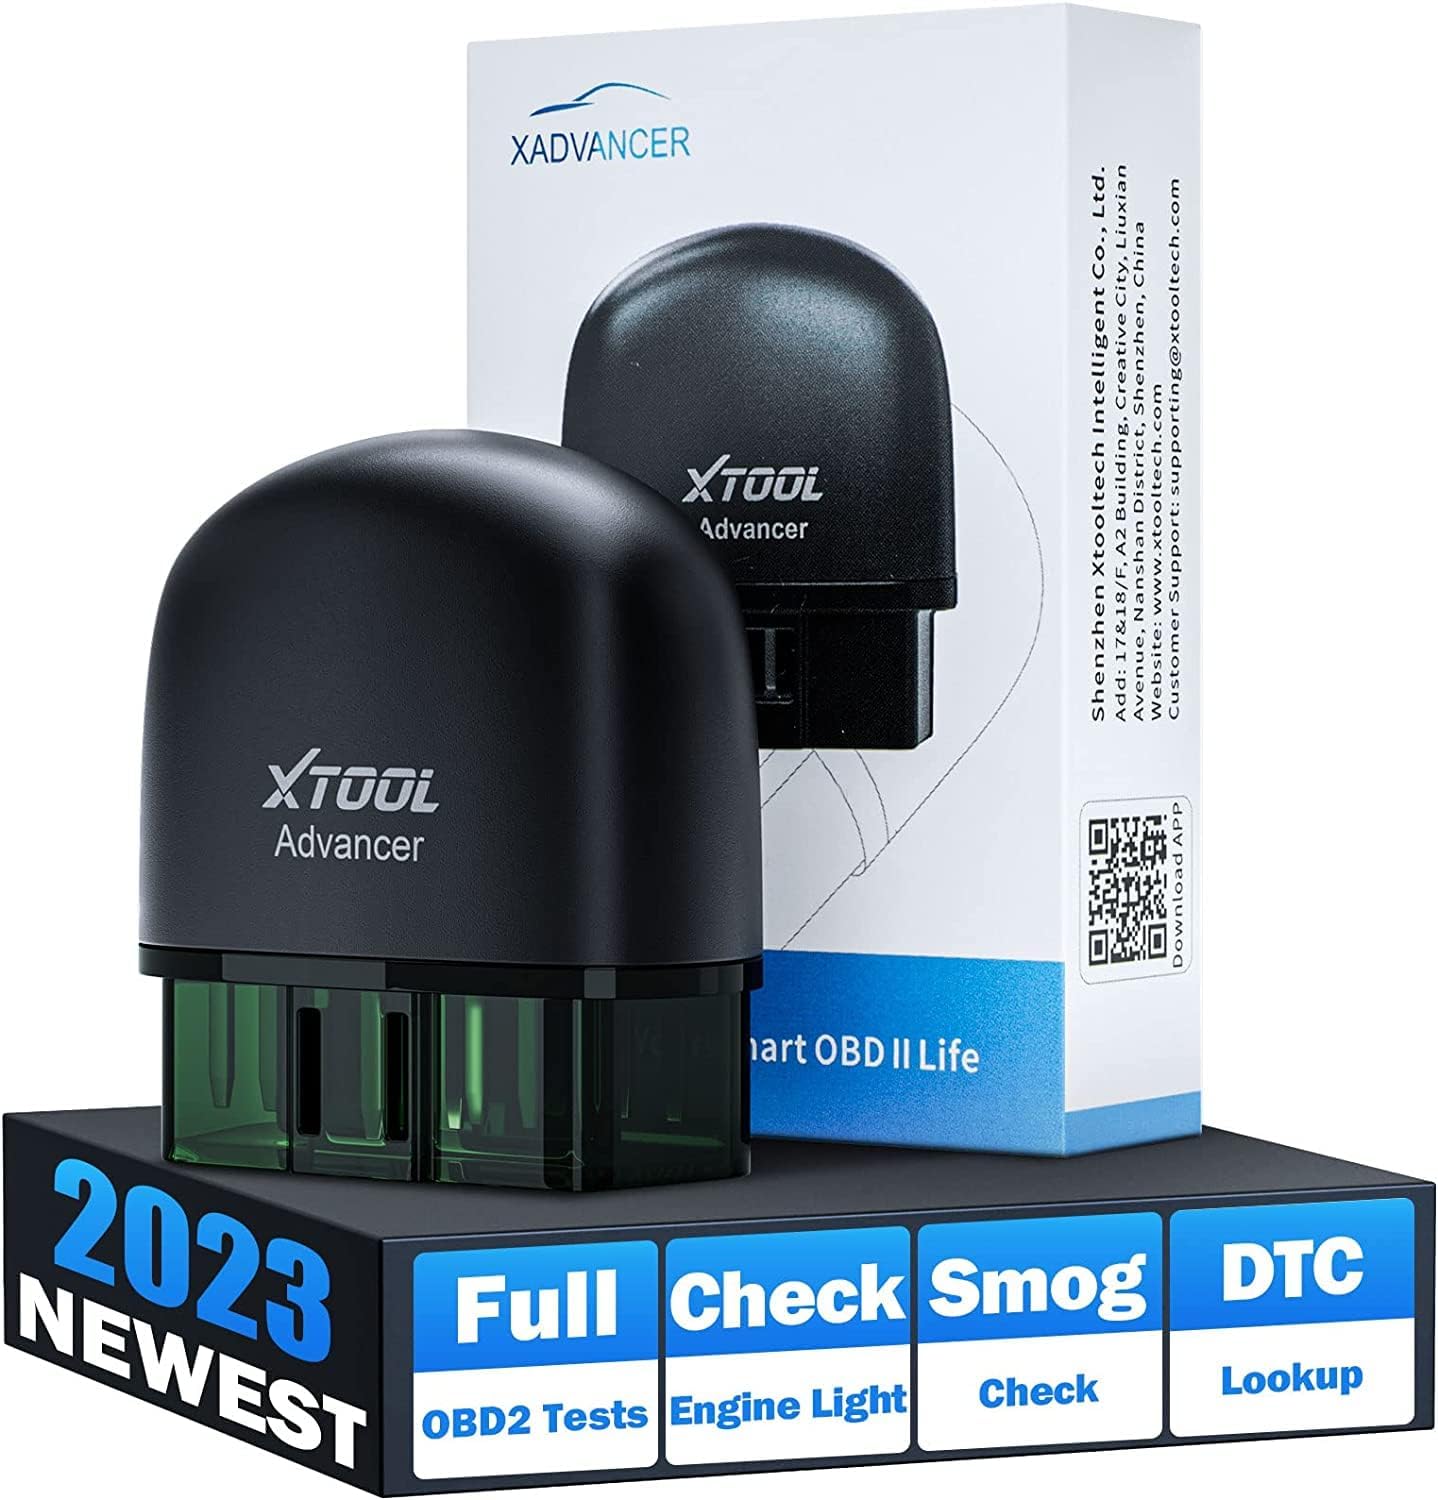 XTOOL Advancer AD20 OBD2 Scanner Check Engine Light [...]